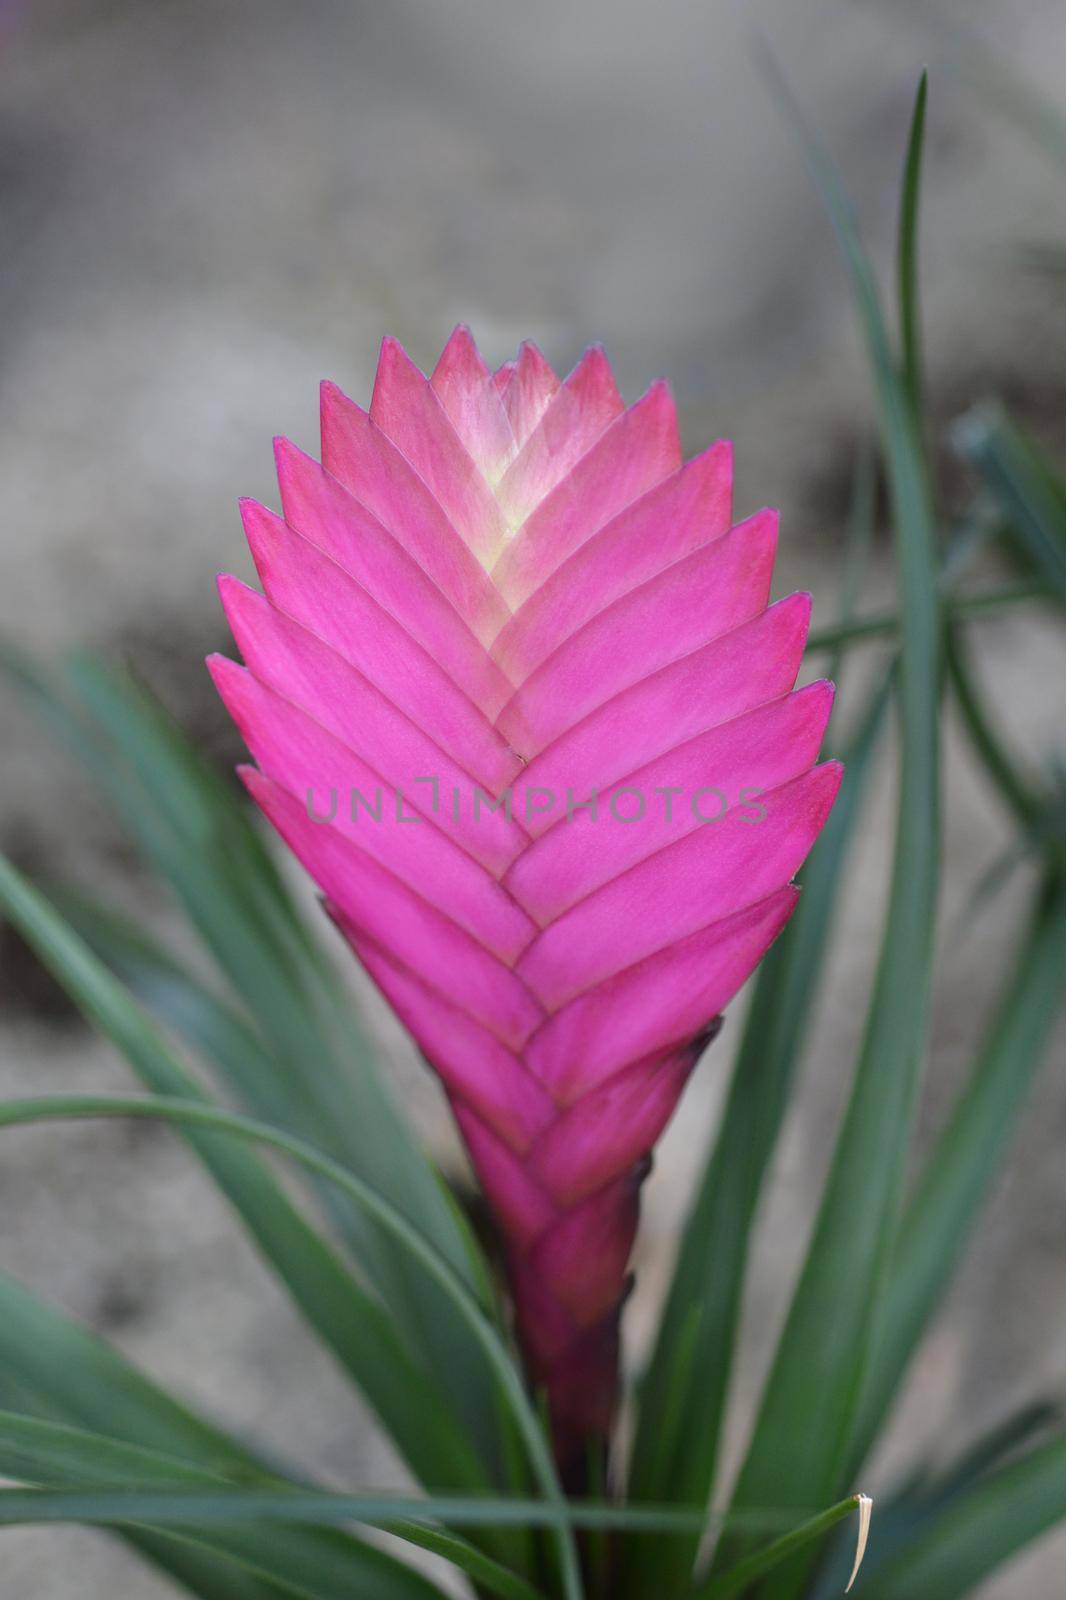 Pink quil - Latin name - Tillandsia cyanea